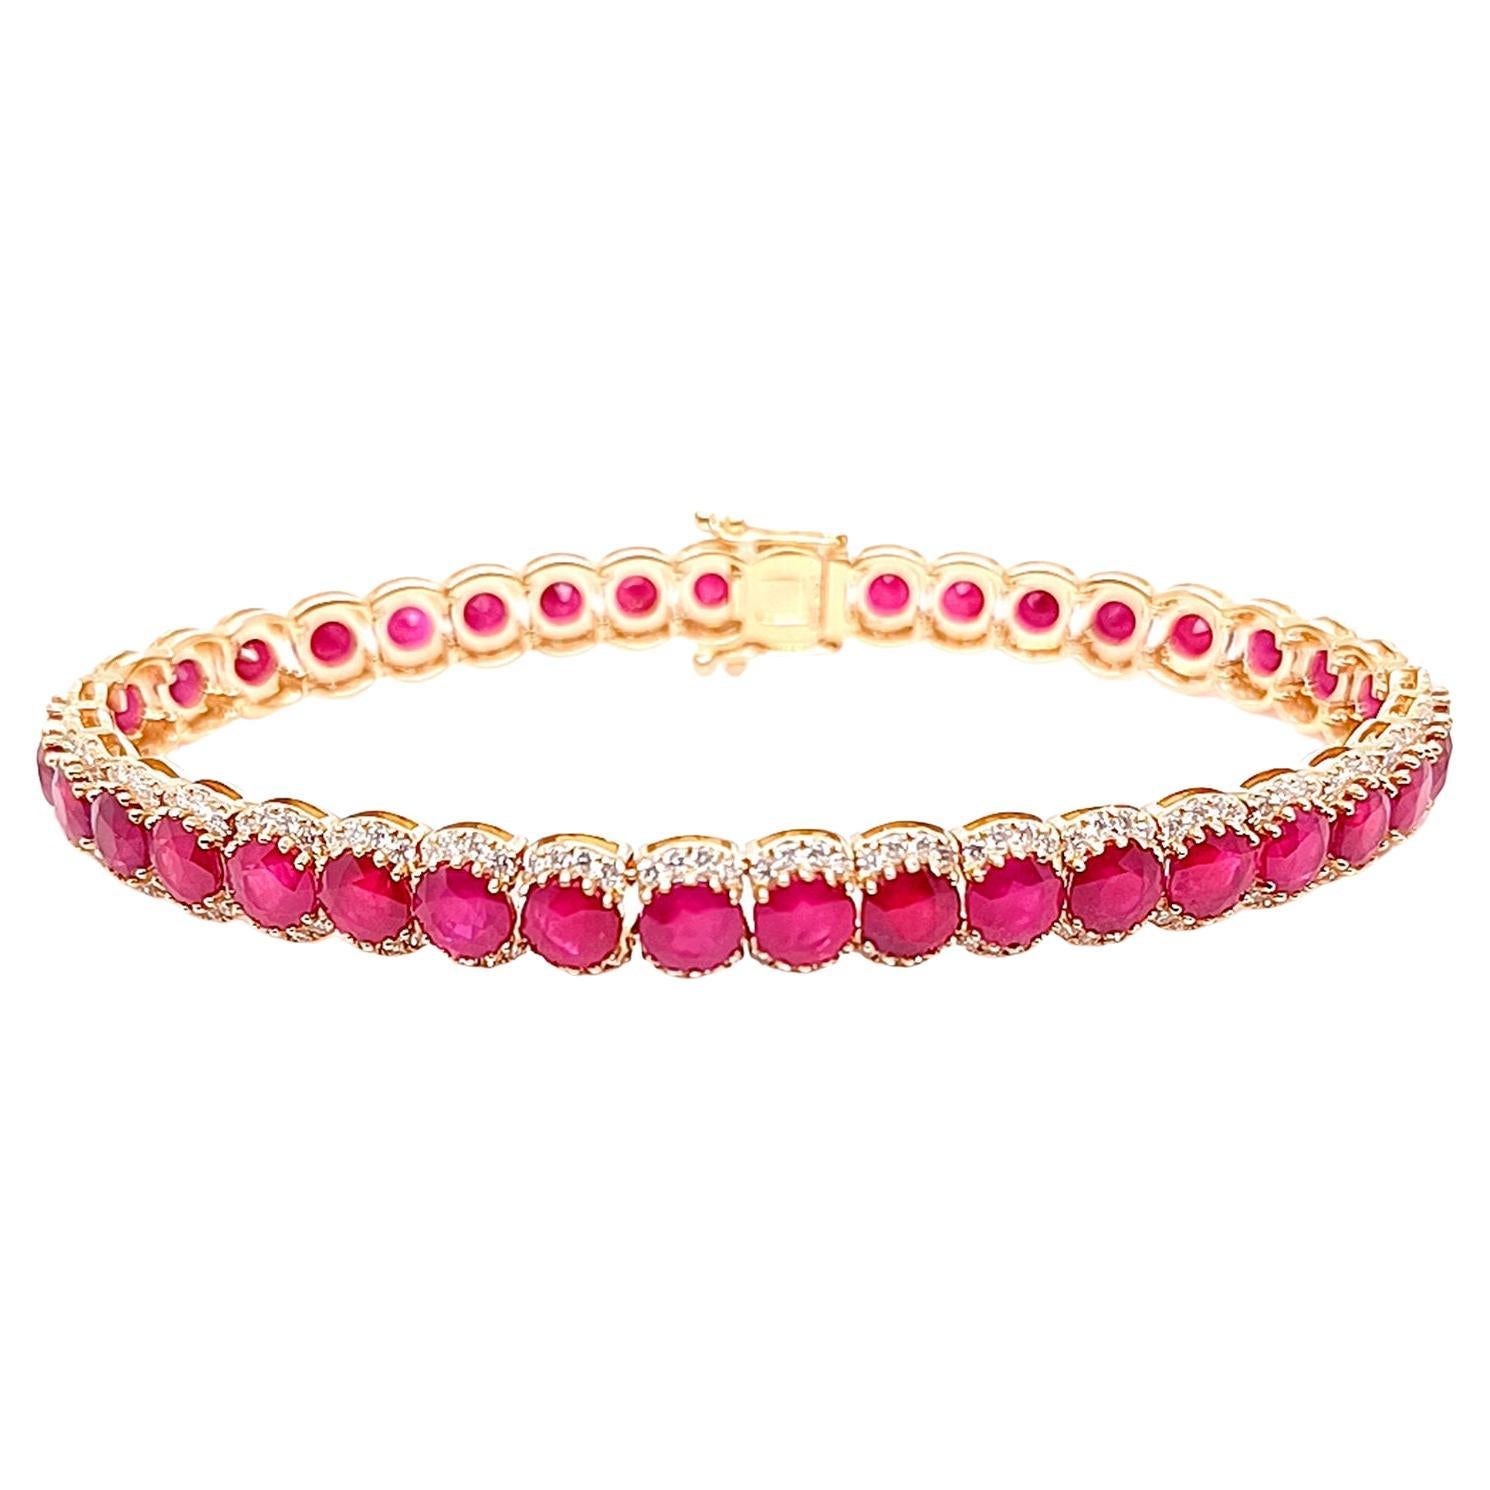 Ruby Tennis Bracelet With Diamonds 21.14 Carats 14K Yellow Gold